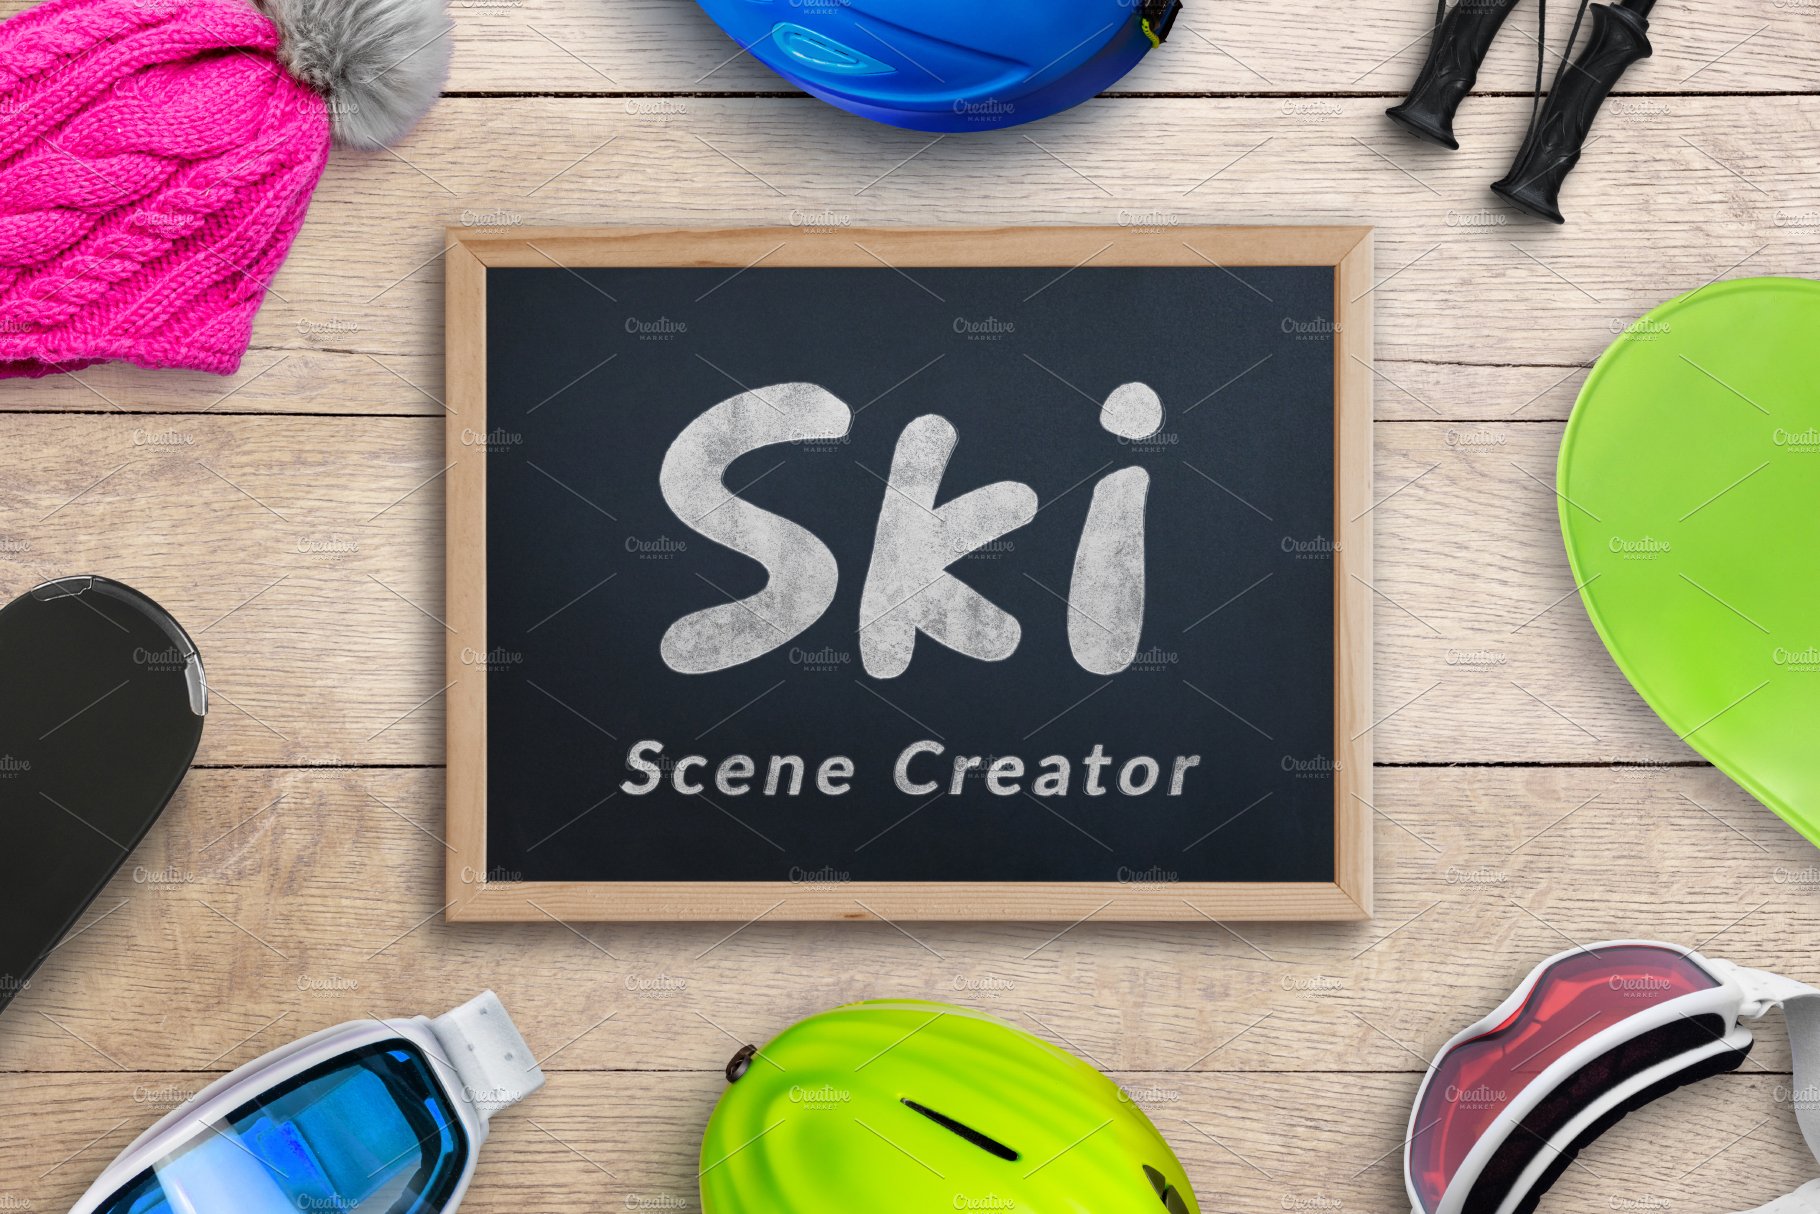 Ski scene creator with chalkboard cover image.